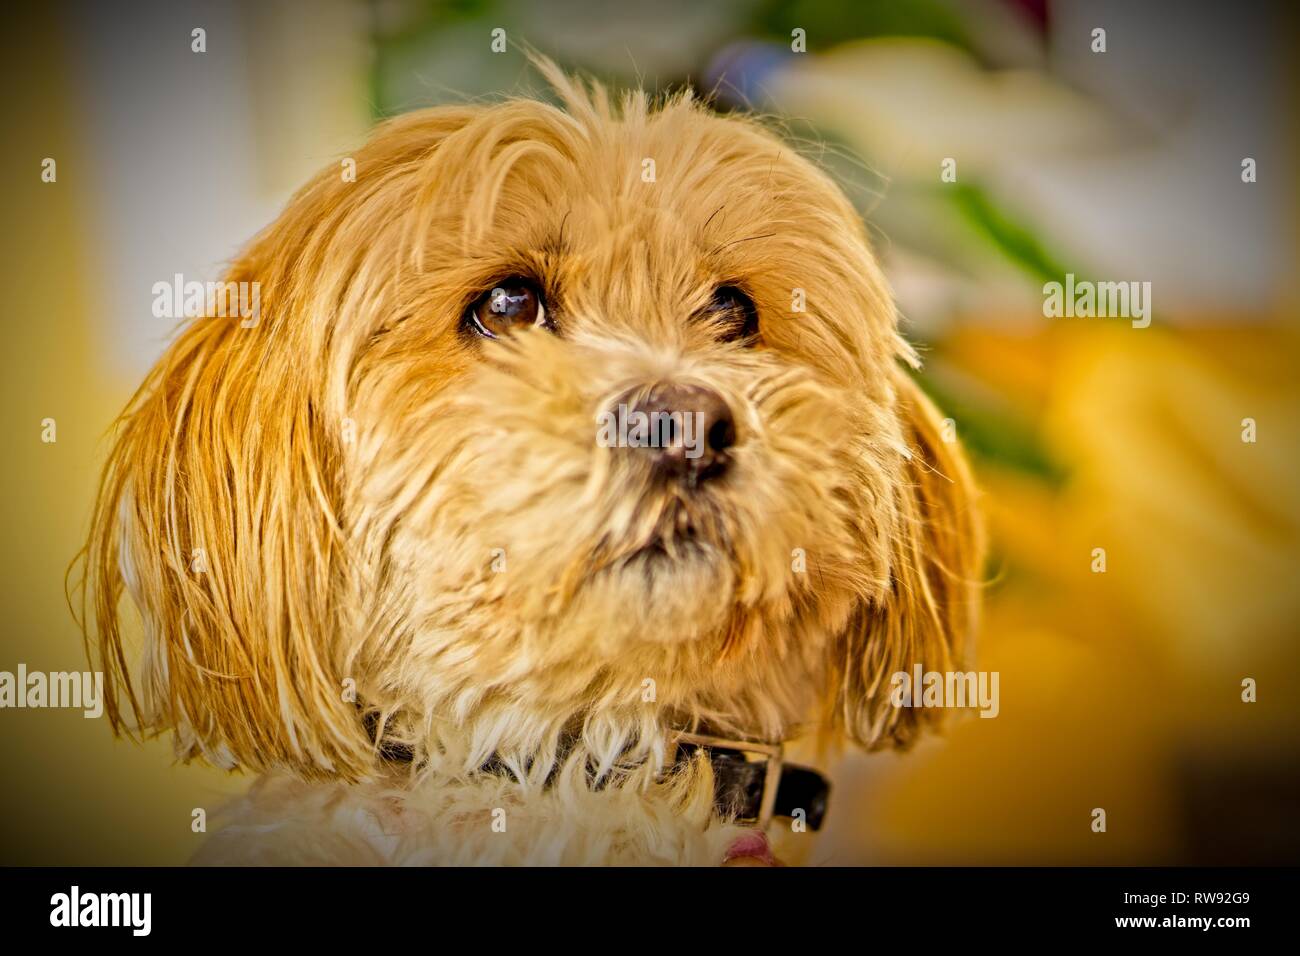 Pet portrait of dog Stock Photo